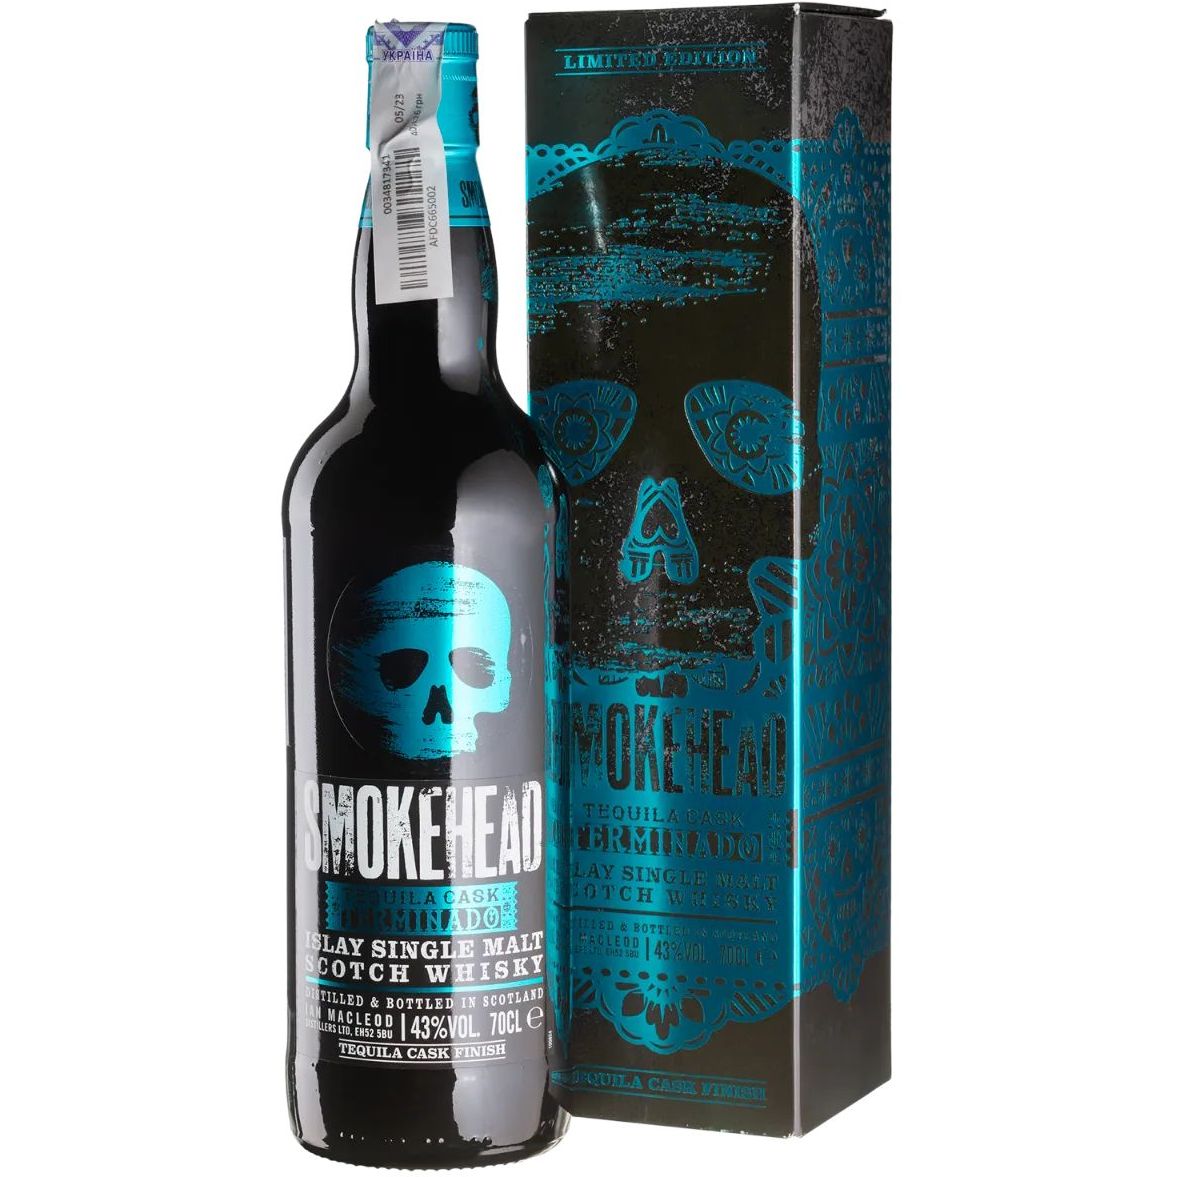 Виски Smokehead Terminado Tequila Finish Single Malt Scotch Whisky 43% 0.7 л, в подарочной упаковке - фото 1